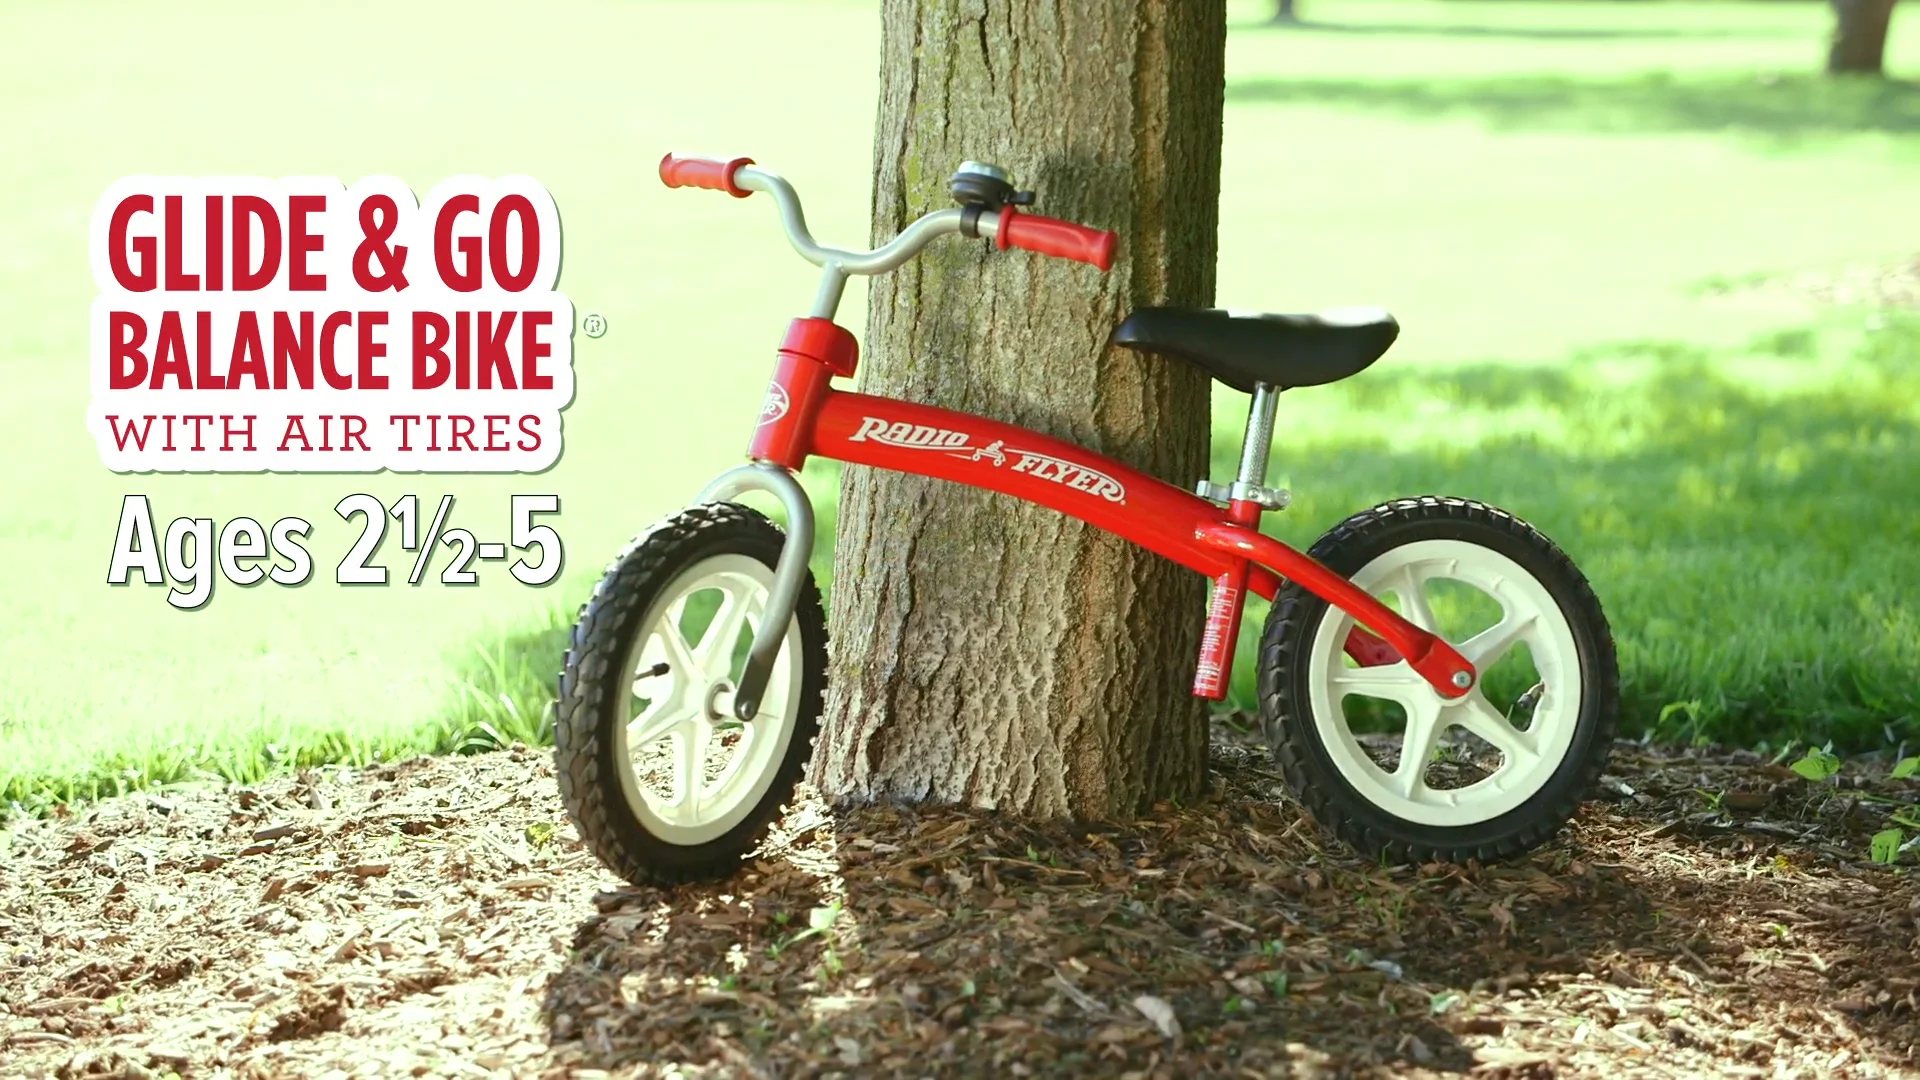 Radio Flyer - Glide & Go Balance Bike with Air Tires